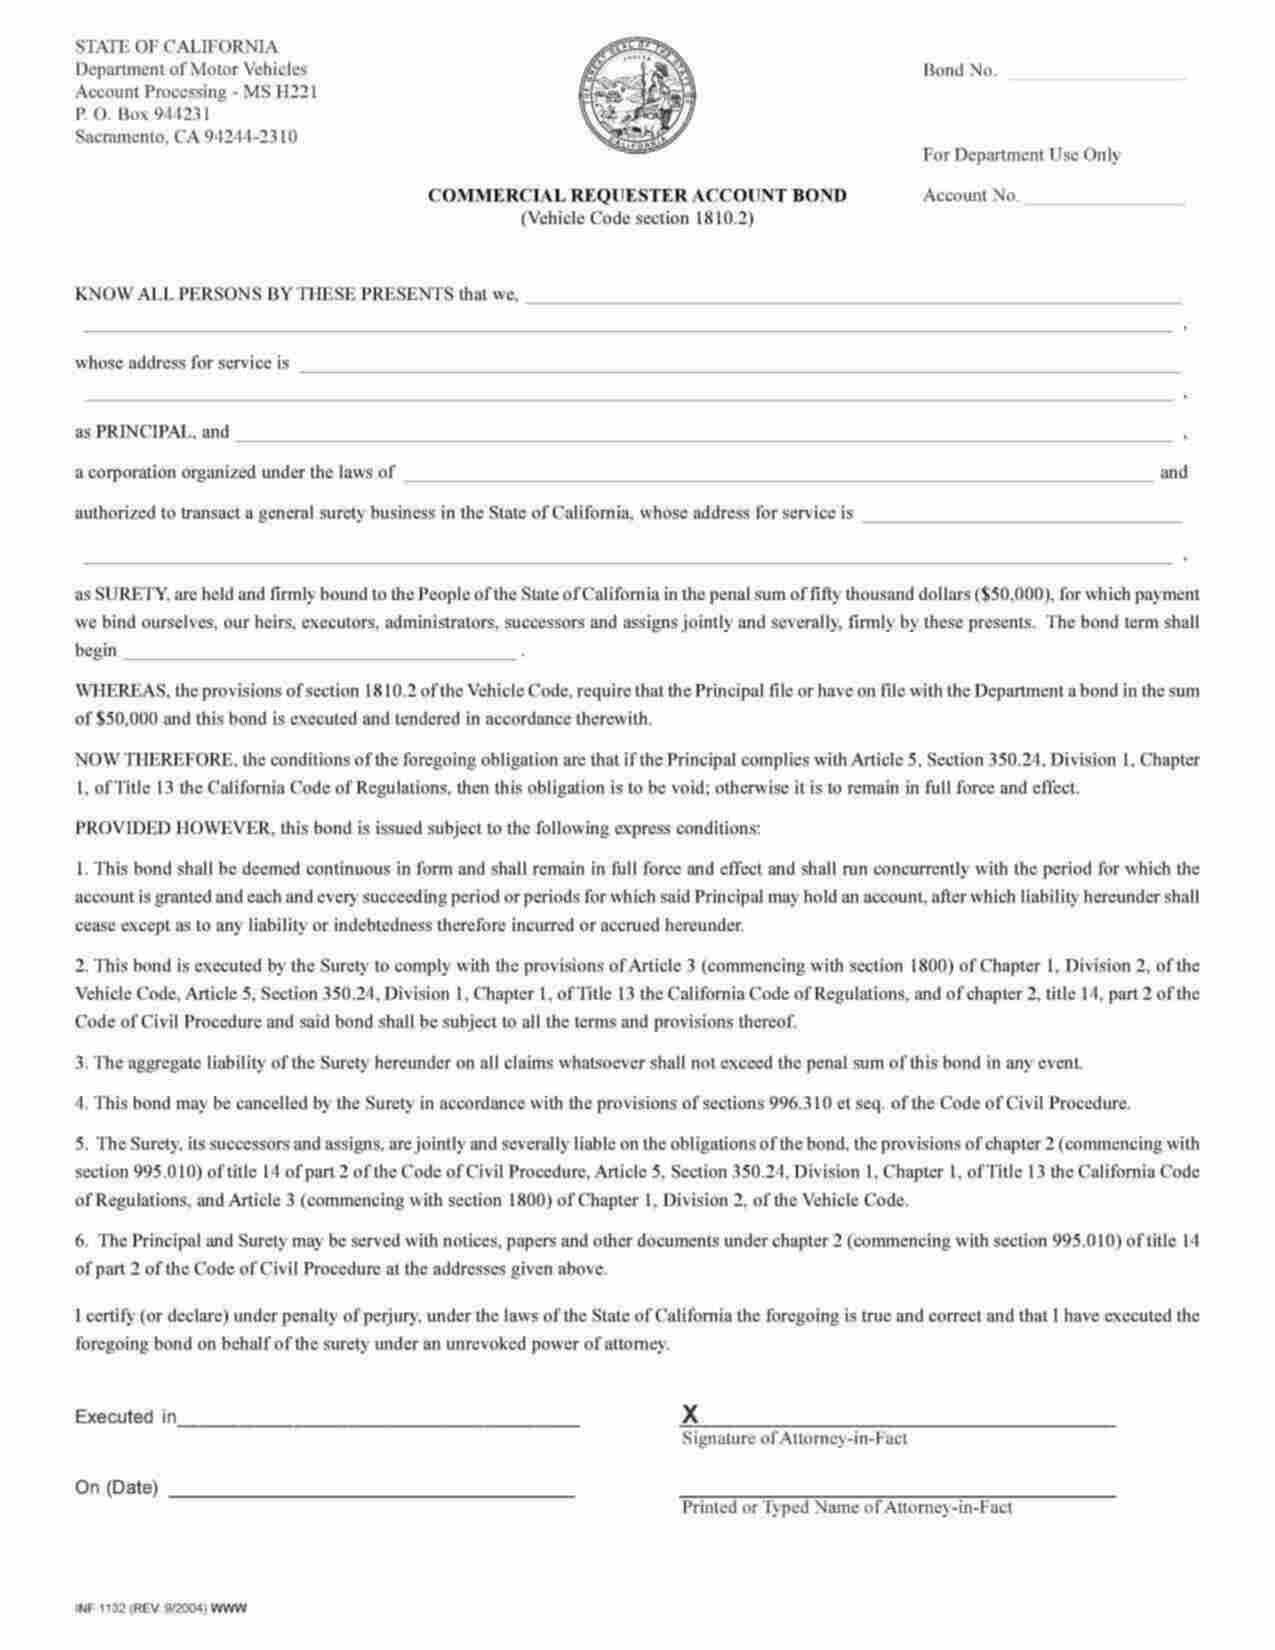 California Commercial Requester Account Bond Form